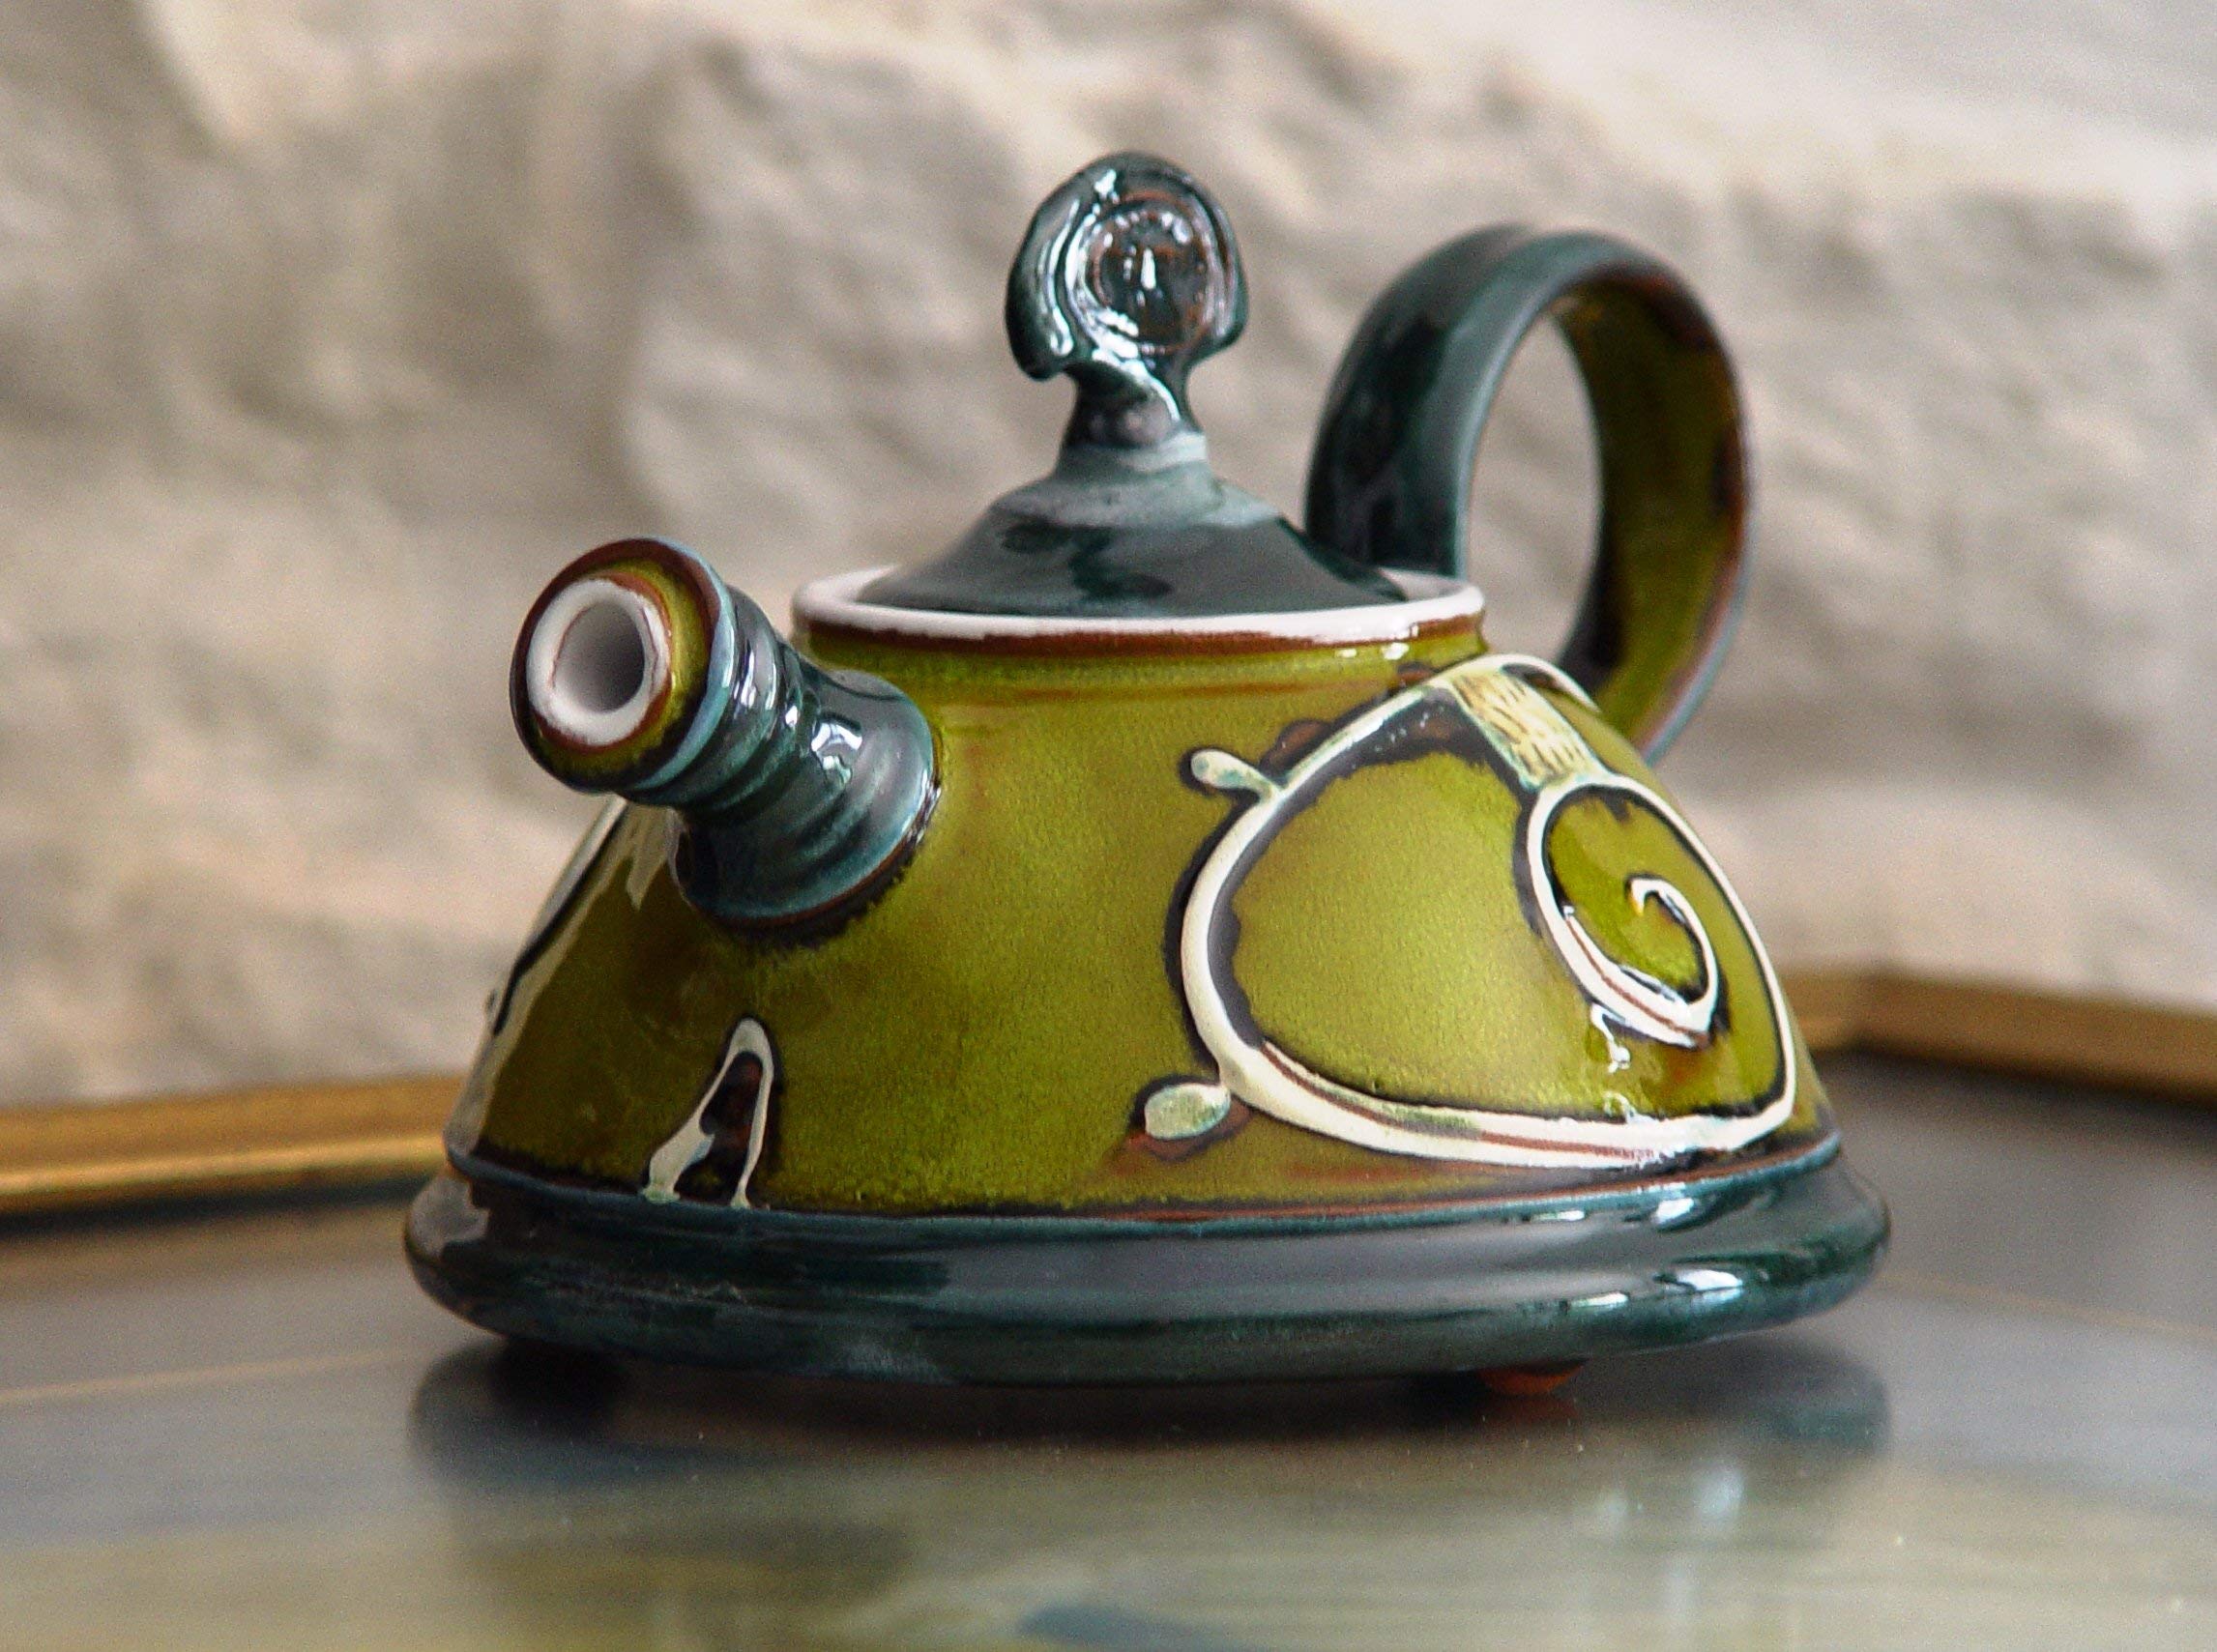 Handmade Ceramic Teapot, Small Pottery Tea or Coffee Pot, Green and Blue Ceramic Pot, Pottery Gift, Wheel Thrown Pottery, Danko Handmade